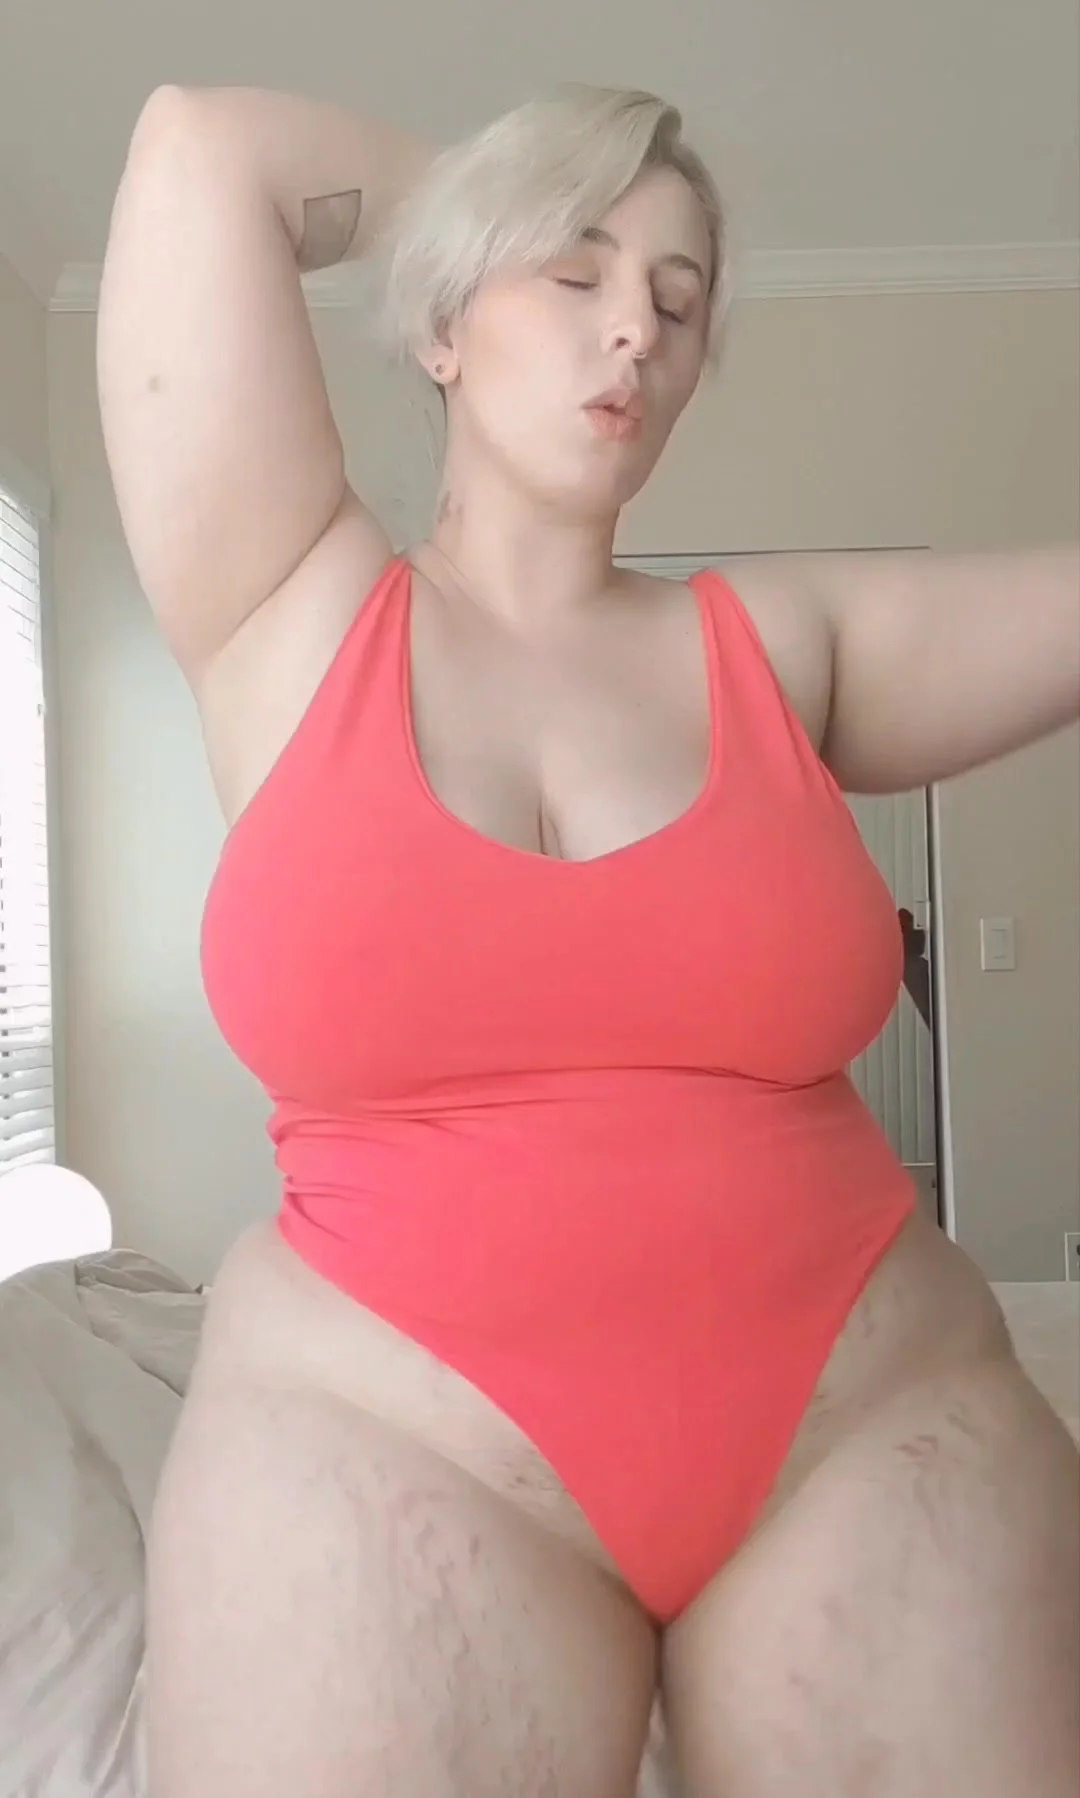 Hot Sexy Bbw Sluts - Bbw ssbbw: Sexy chubby slut - video 2 - ThisVid.com